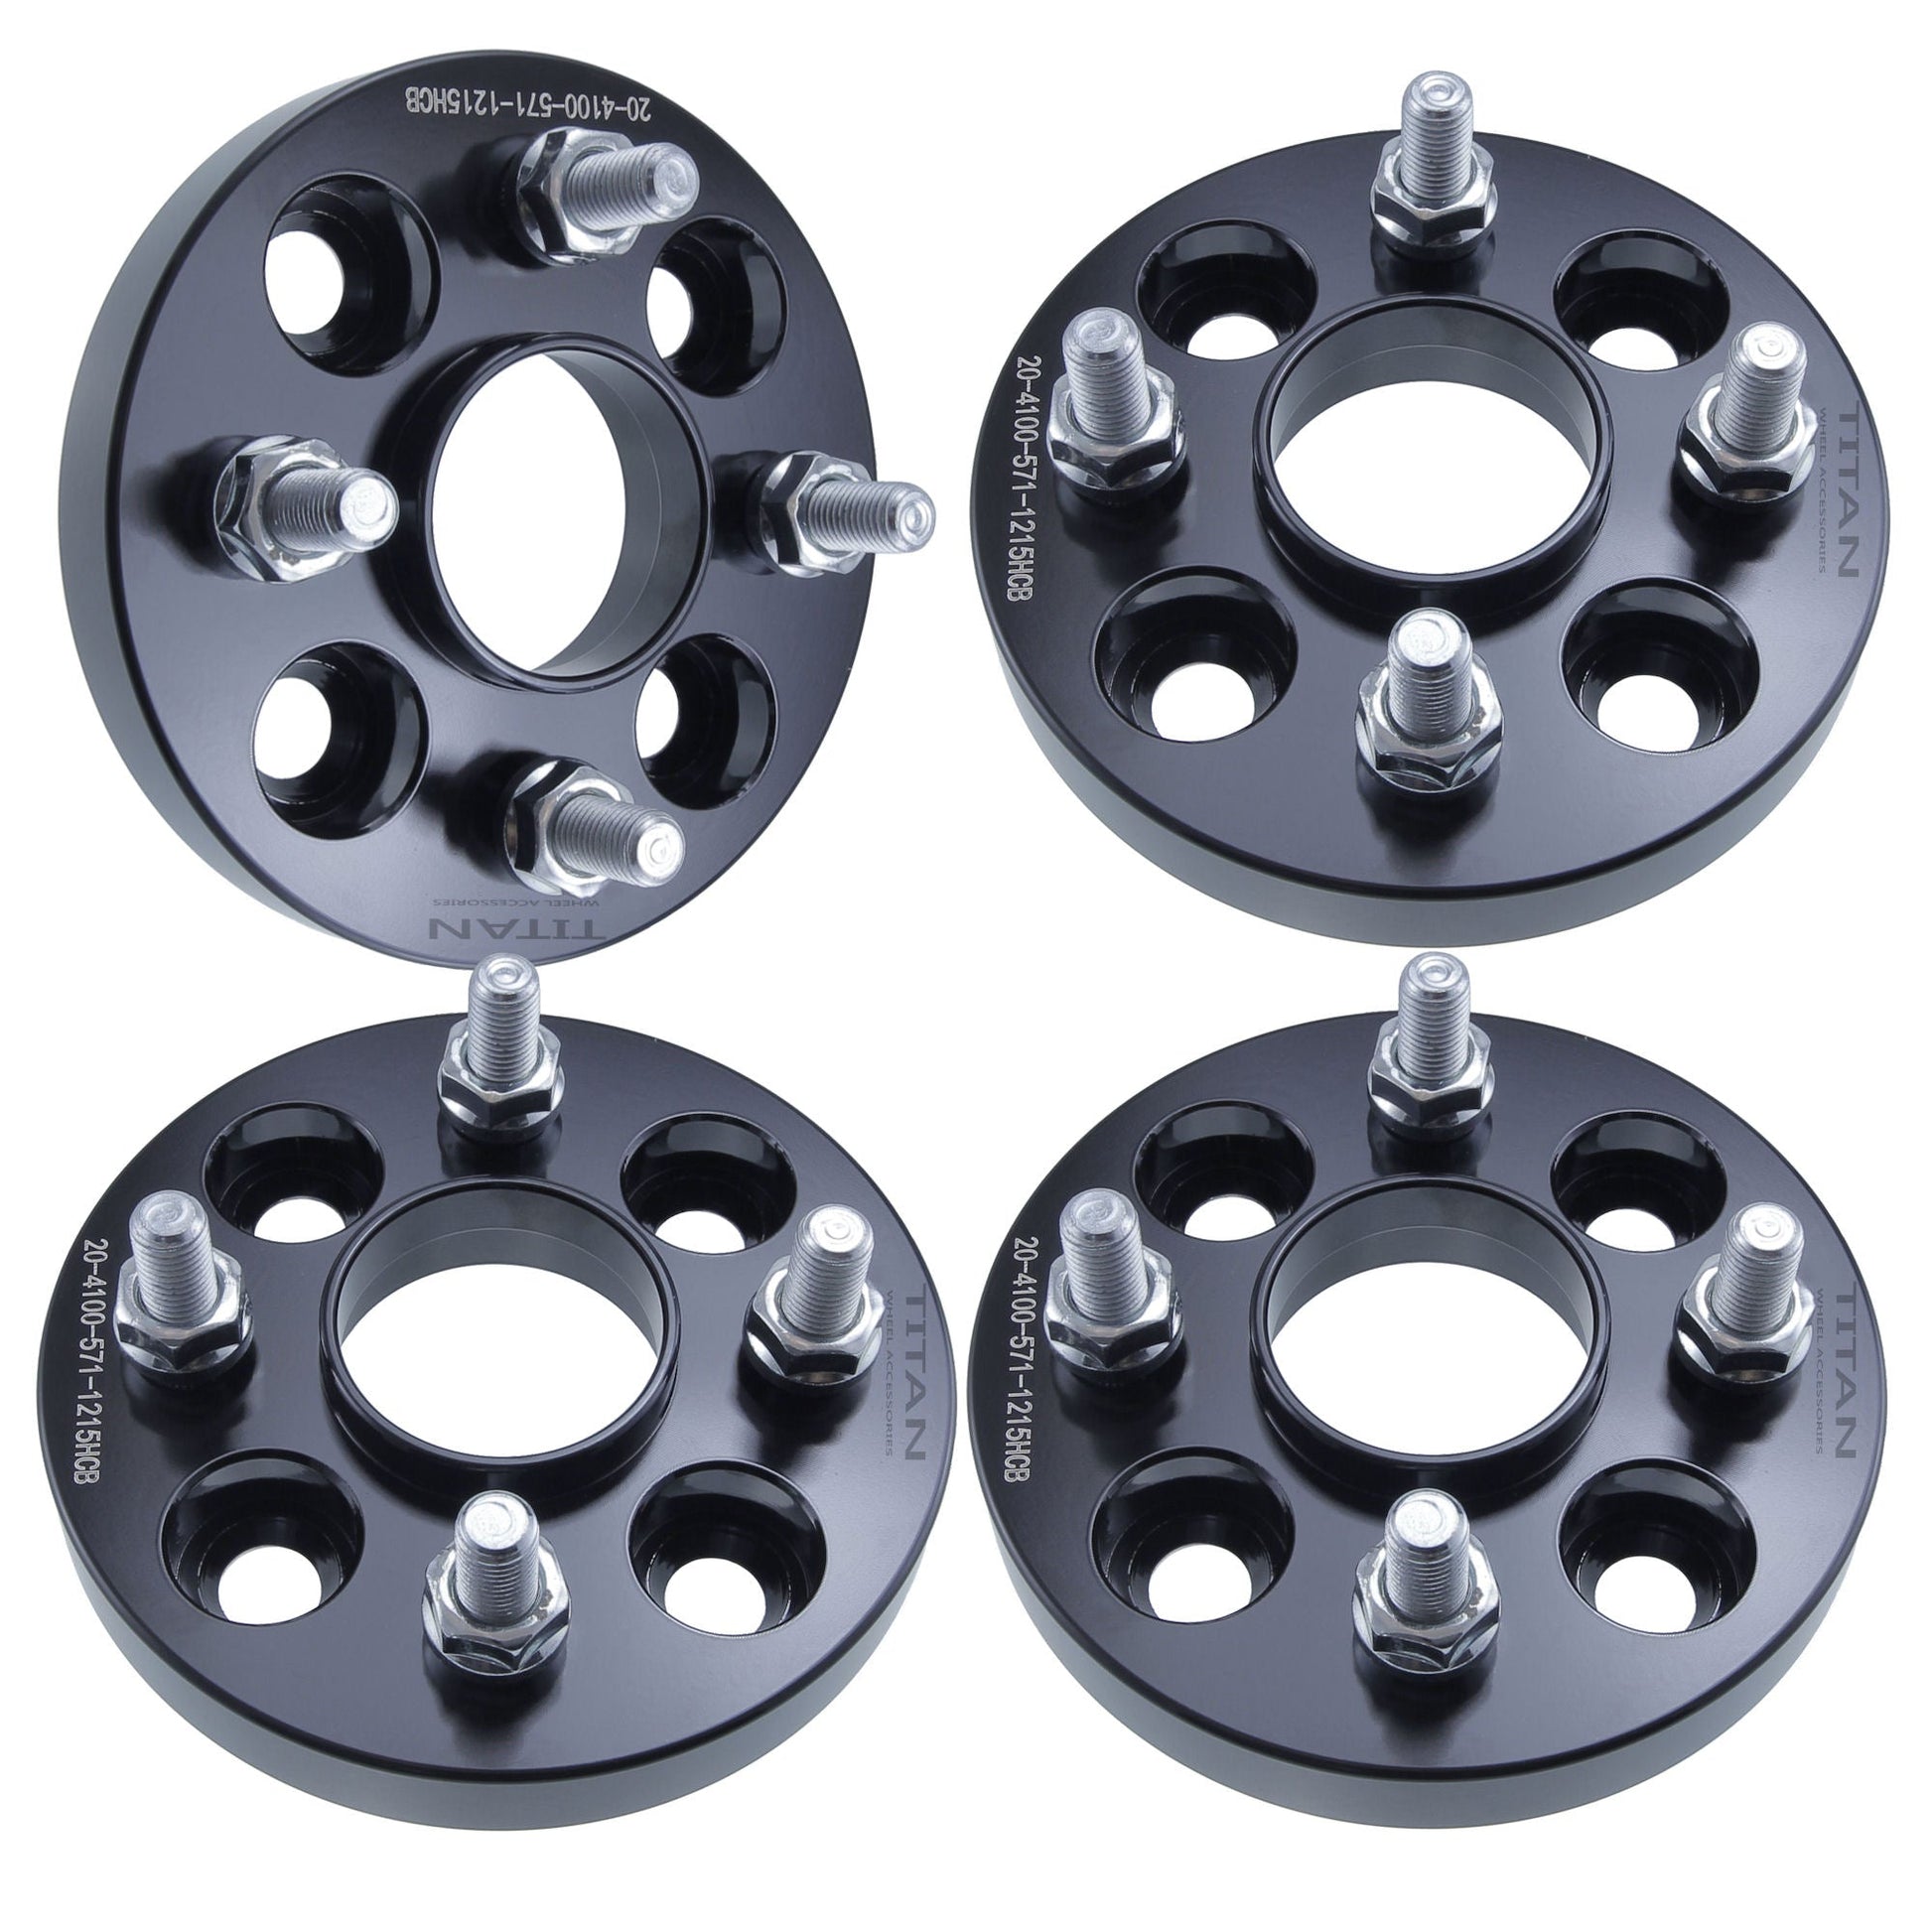 15mm Titan Wheel Spacers for Chevy Cobalt Dodge Neon | 4x100 | 57.1 Hubcentric | 12x1.5 Studs | Set of 4 | Titan Wheel Accessories